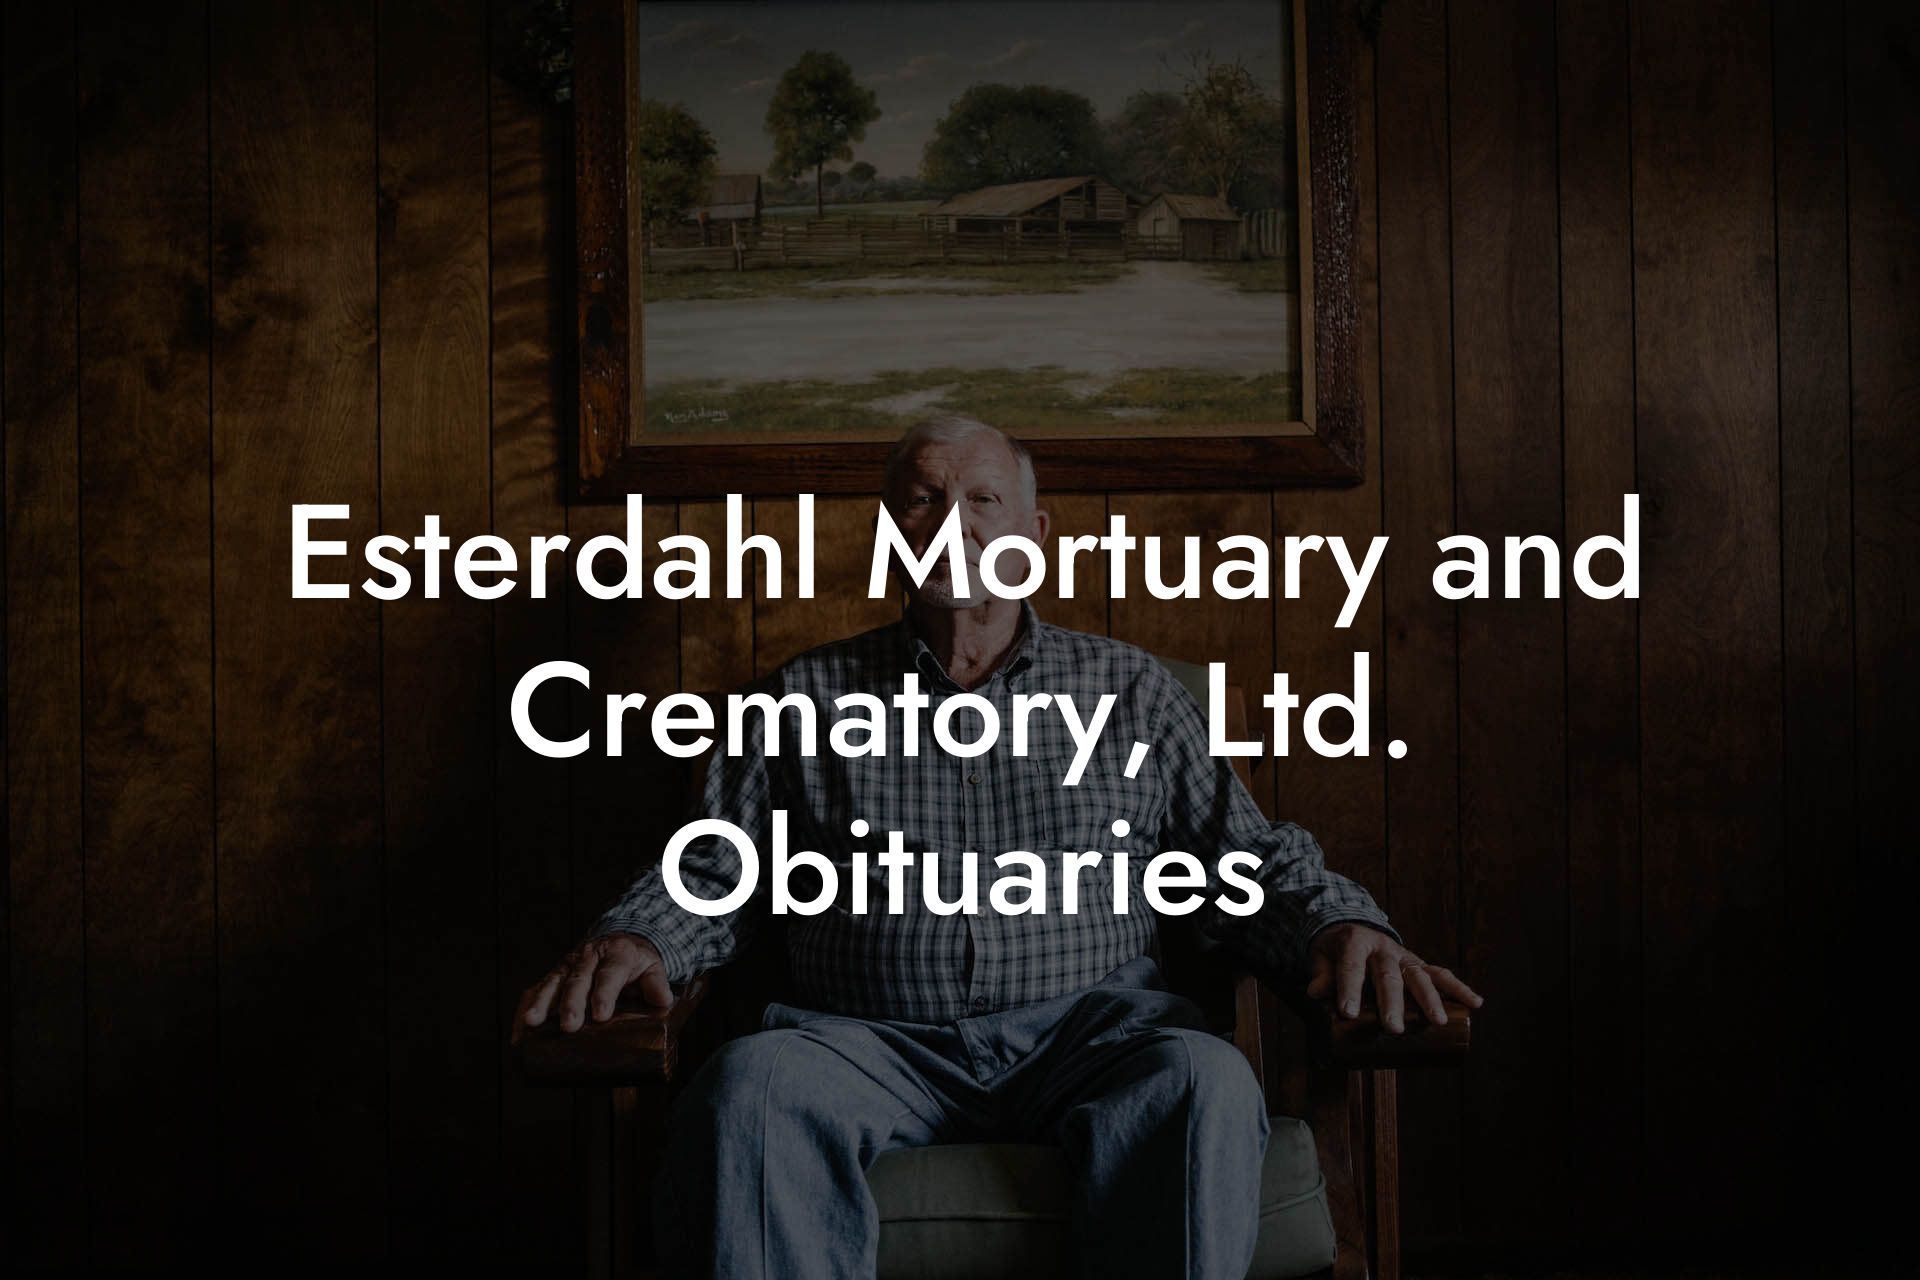 Esterdahl Mortuary and Crematory, Ltd. Obituaries